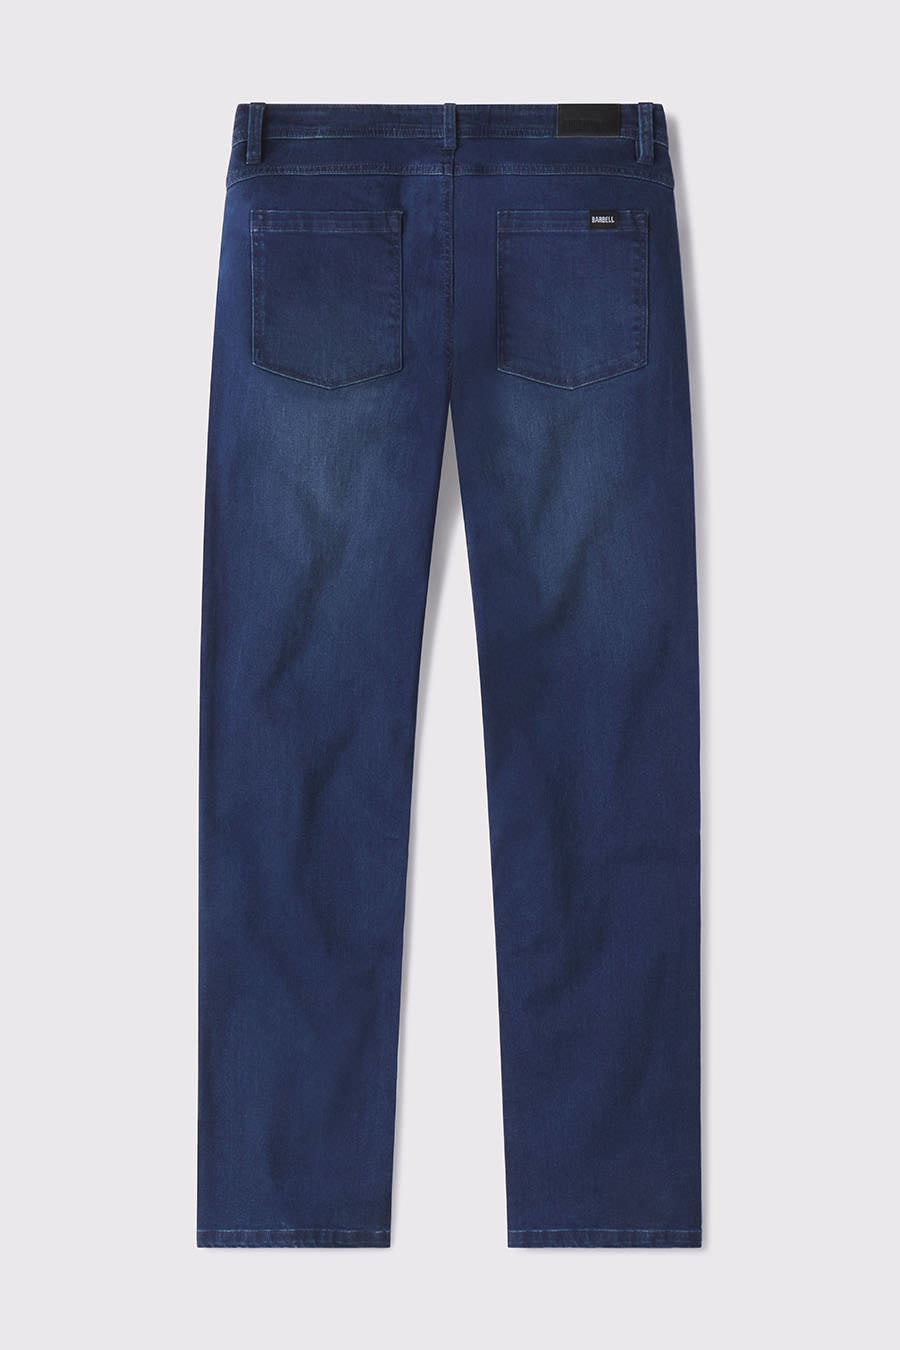 Barbell Apparel Men's Slim Athletic Fit Jeans Destroyed Medium